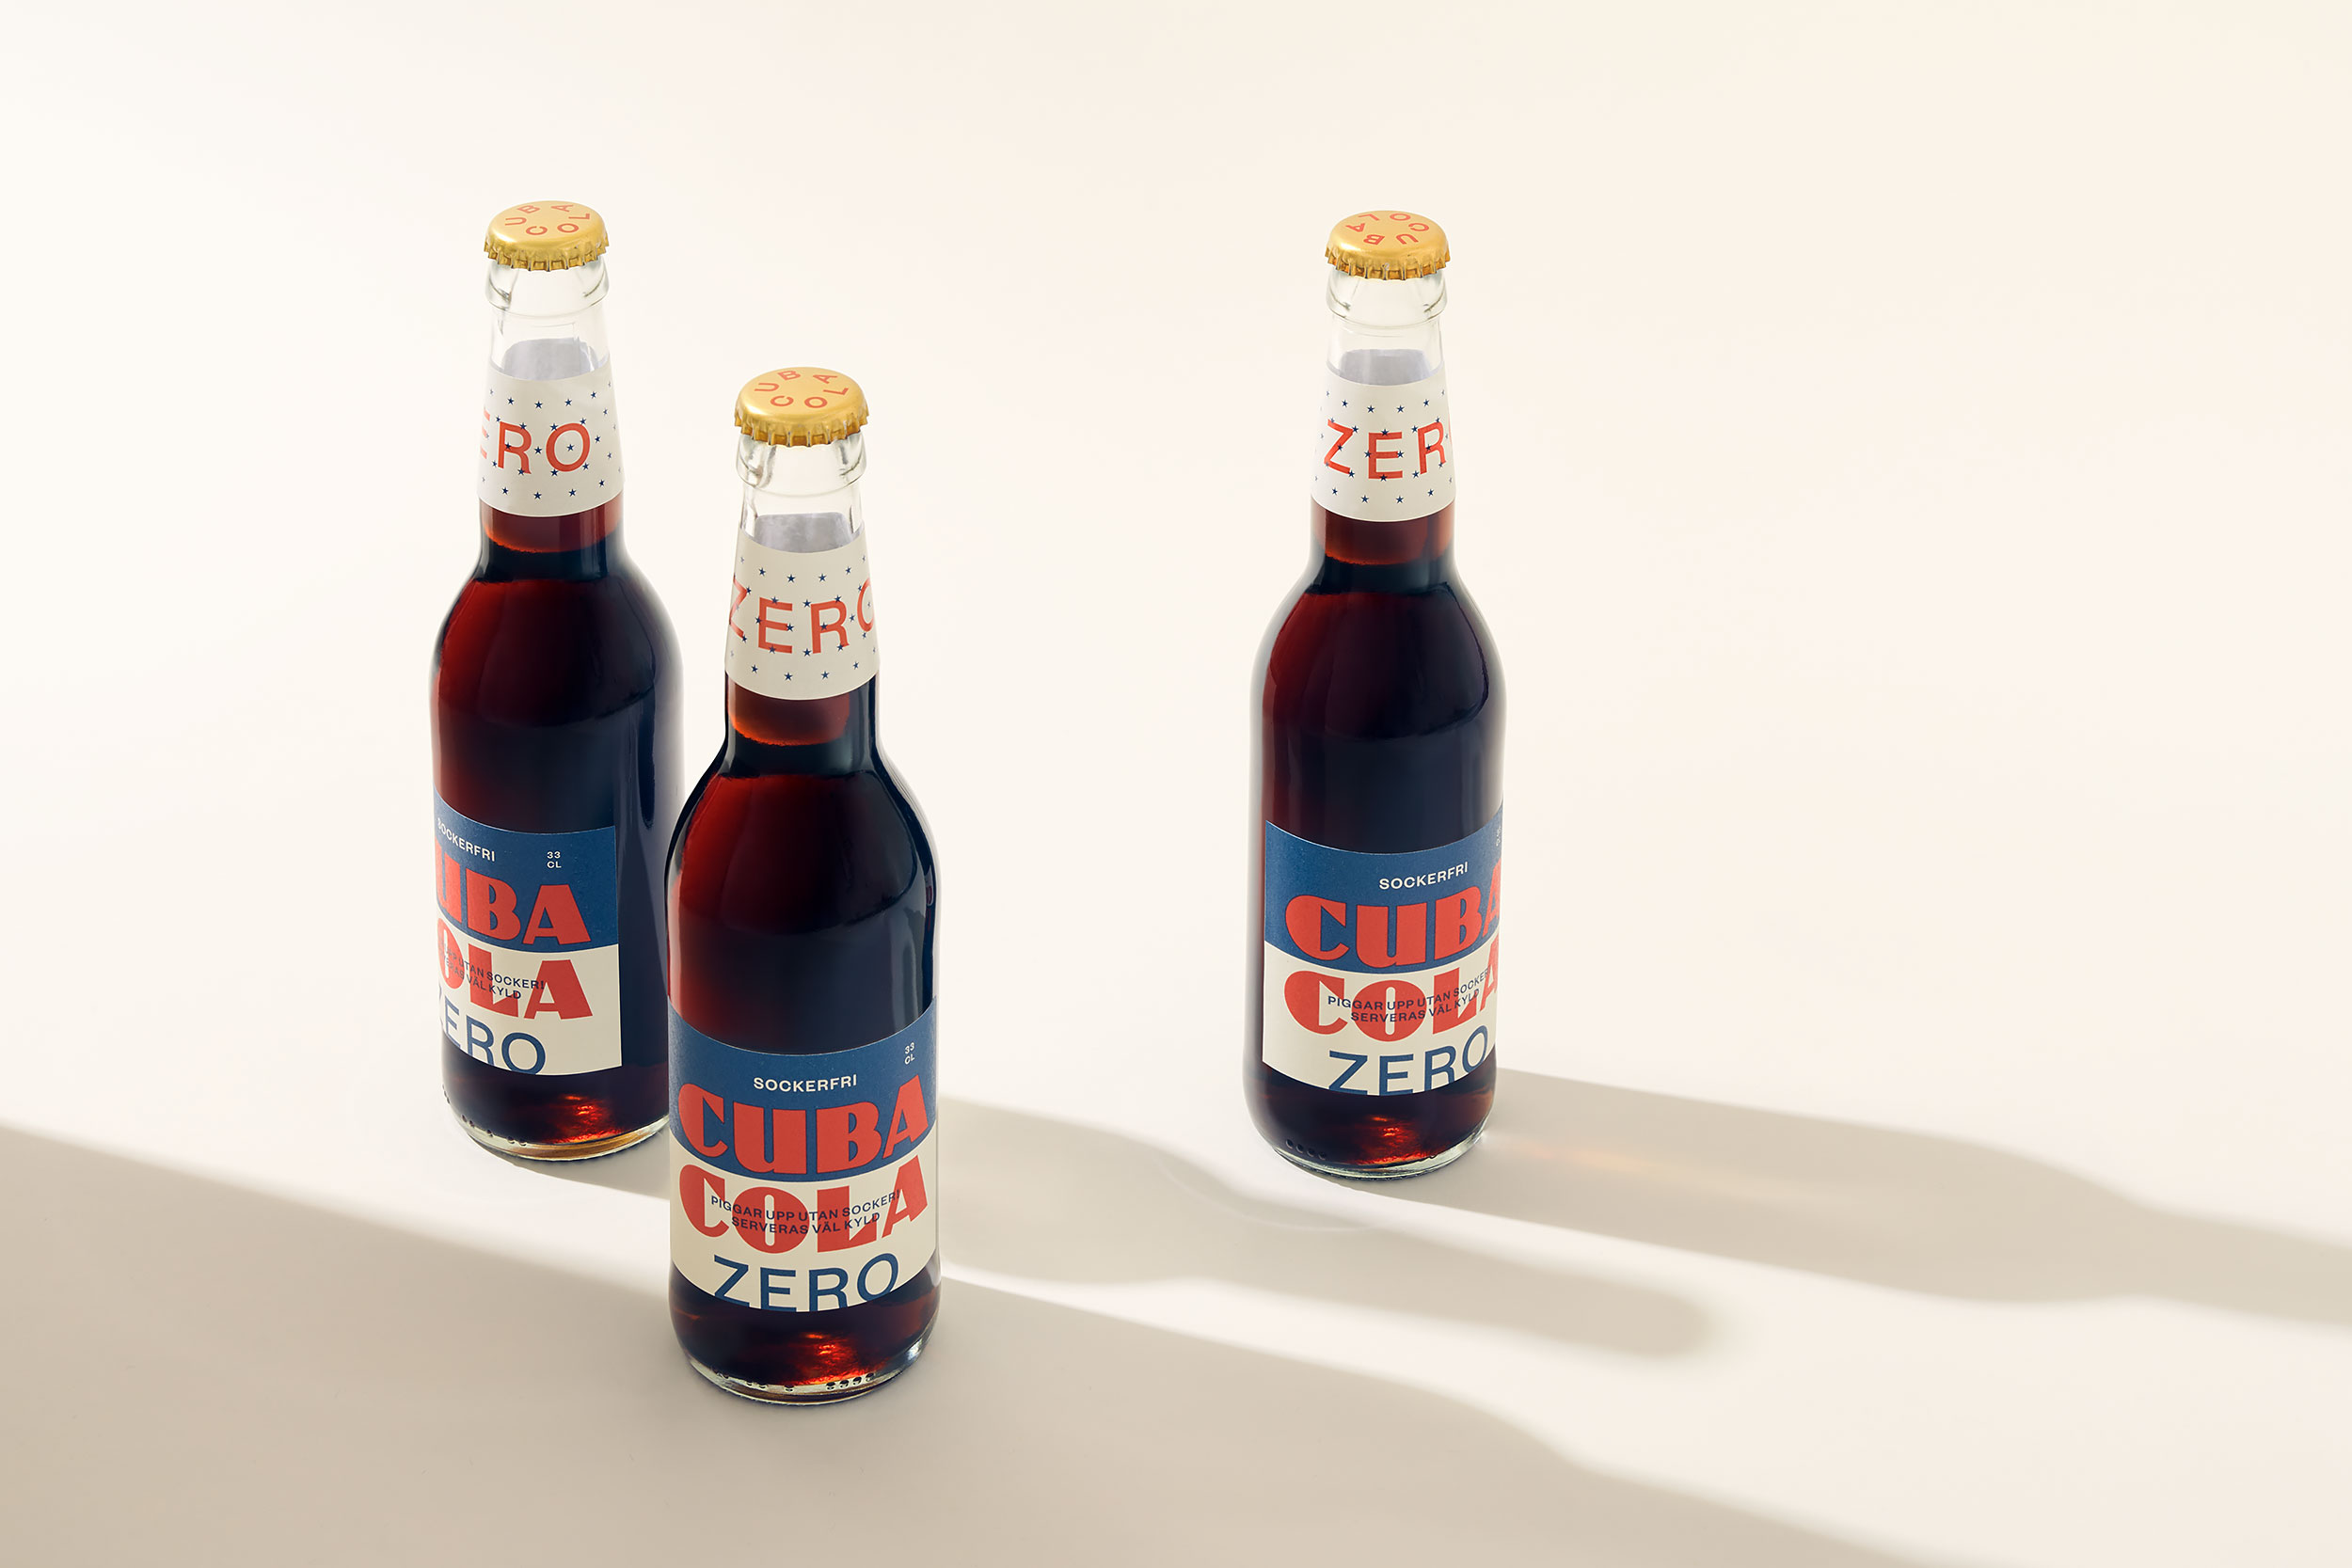 Neumeister packaging design Cuba Cola Zero bottles